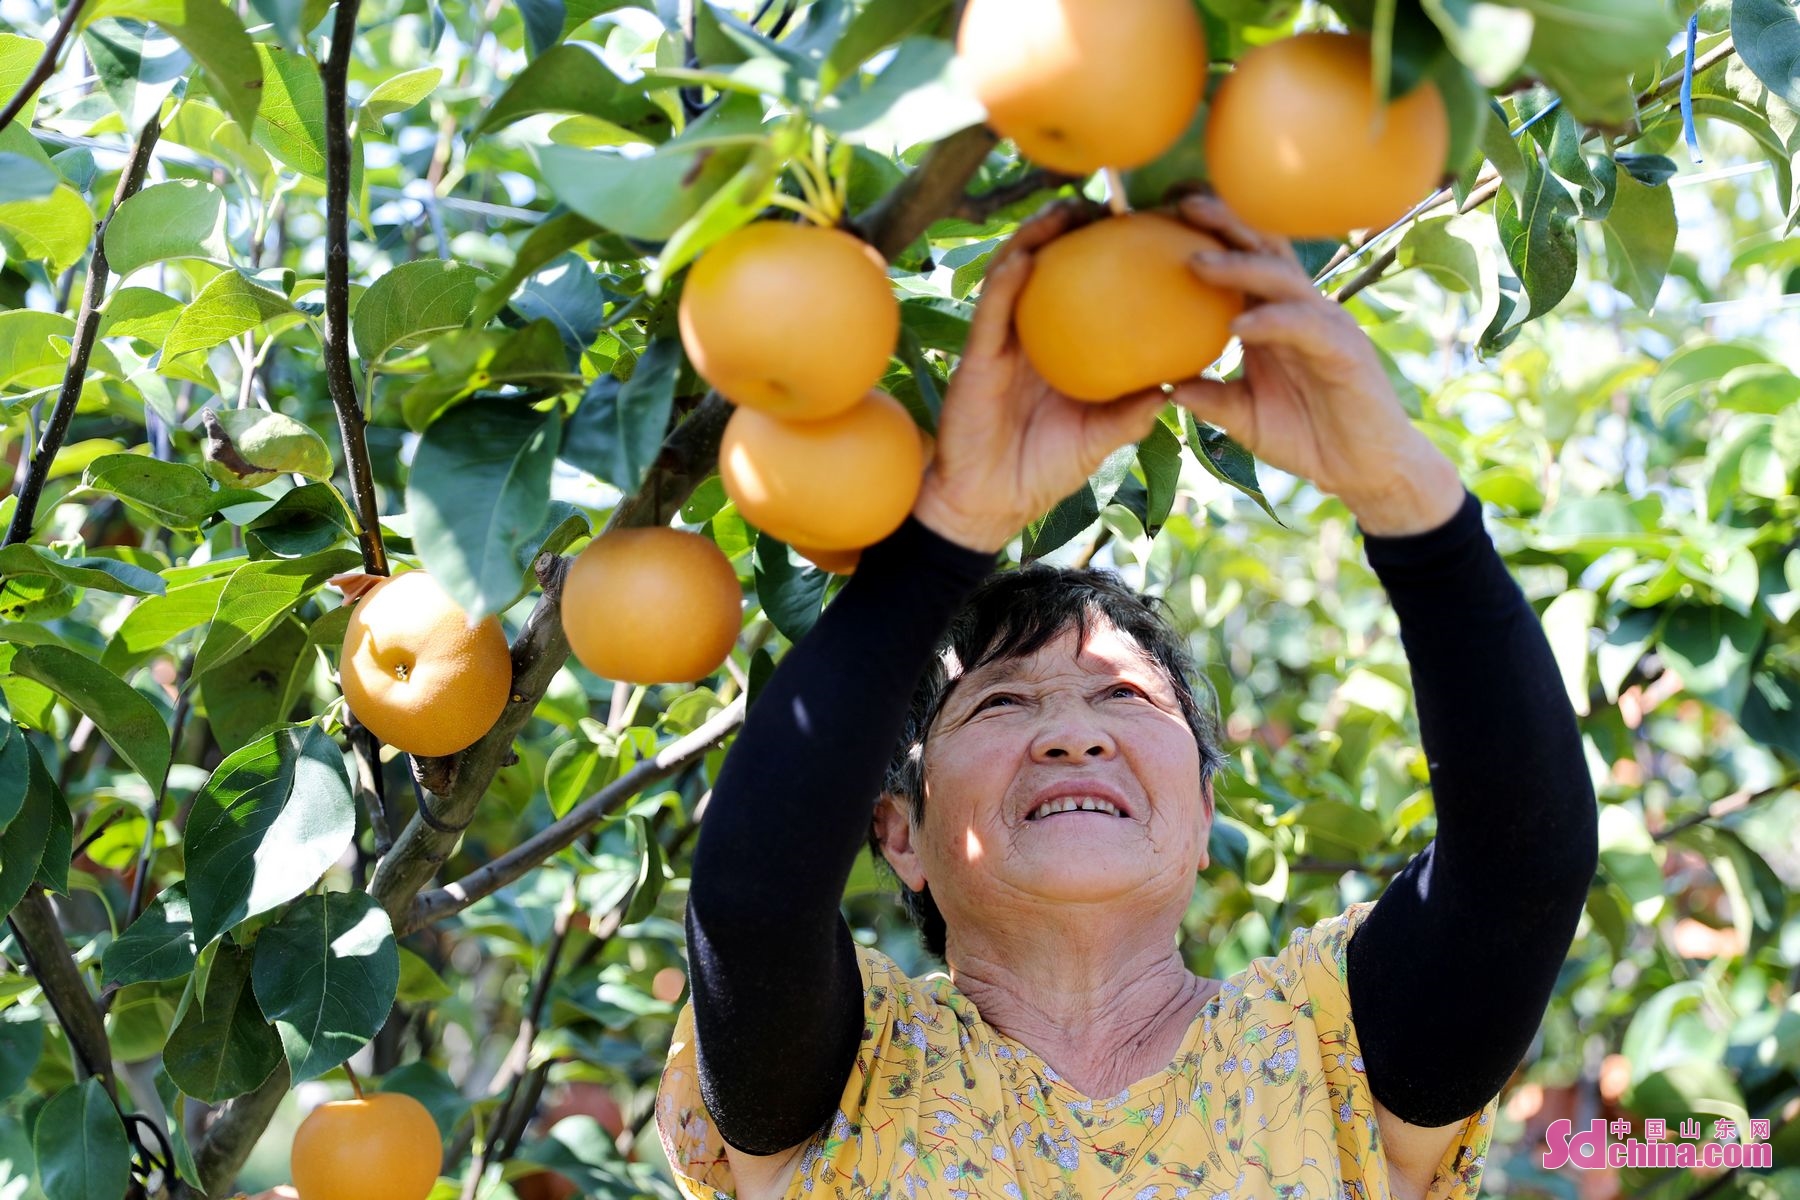 <br/>　　山東省莱西市の秋月梨はこのほど収穫期を迎え、農民たちは畑で忙しく摘み取り、選別、箱詰め、秋月梨を中国各地に販売している。2022年、莱西市の秋月梨の栽培面積は3.1万ムーに達し、販売量は8.87万トンになった。（撮影：張進剛）<br/>　　